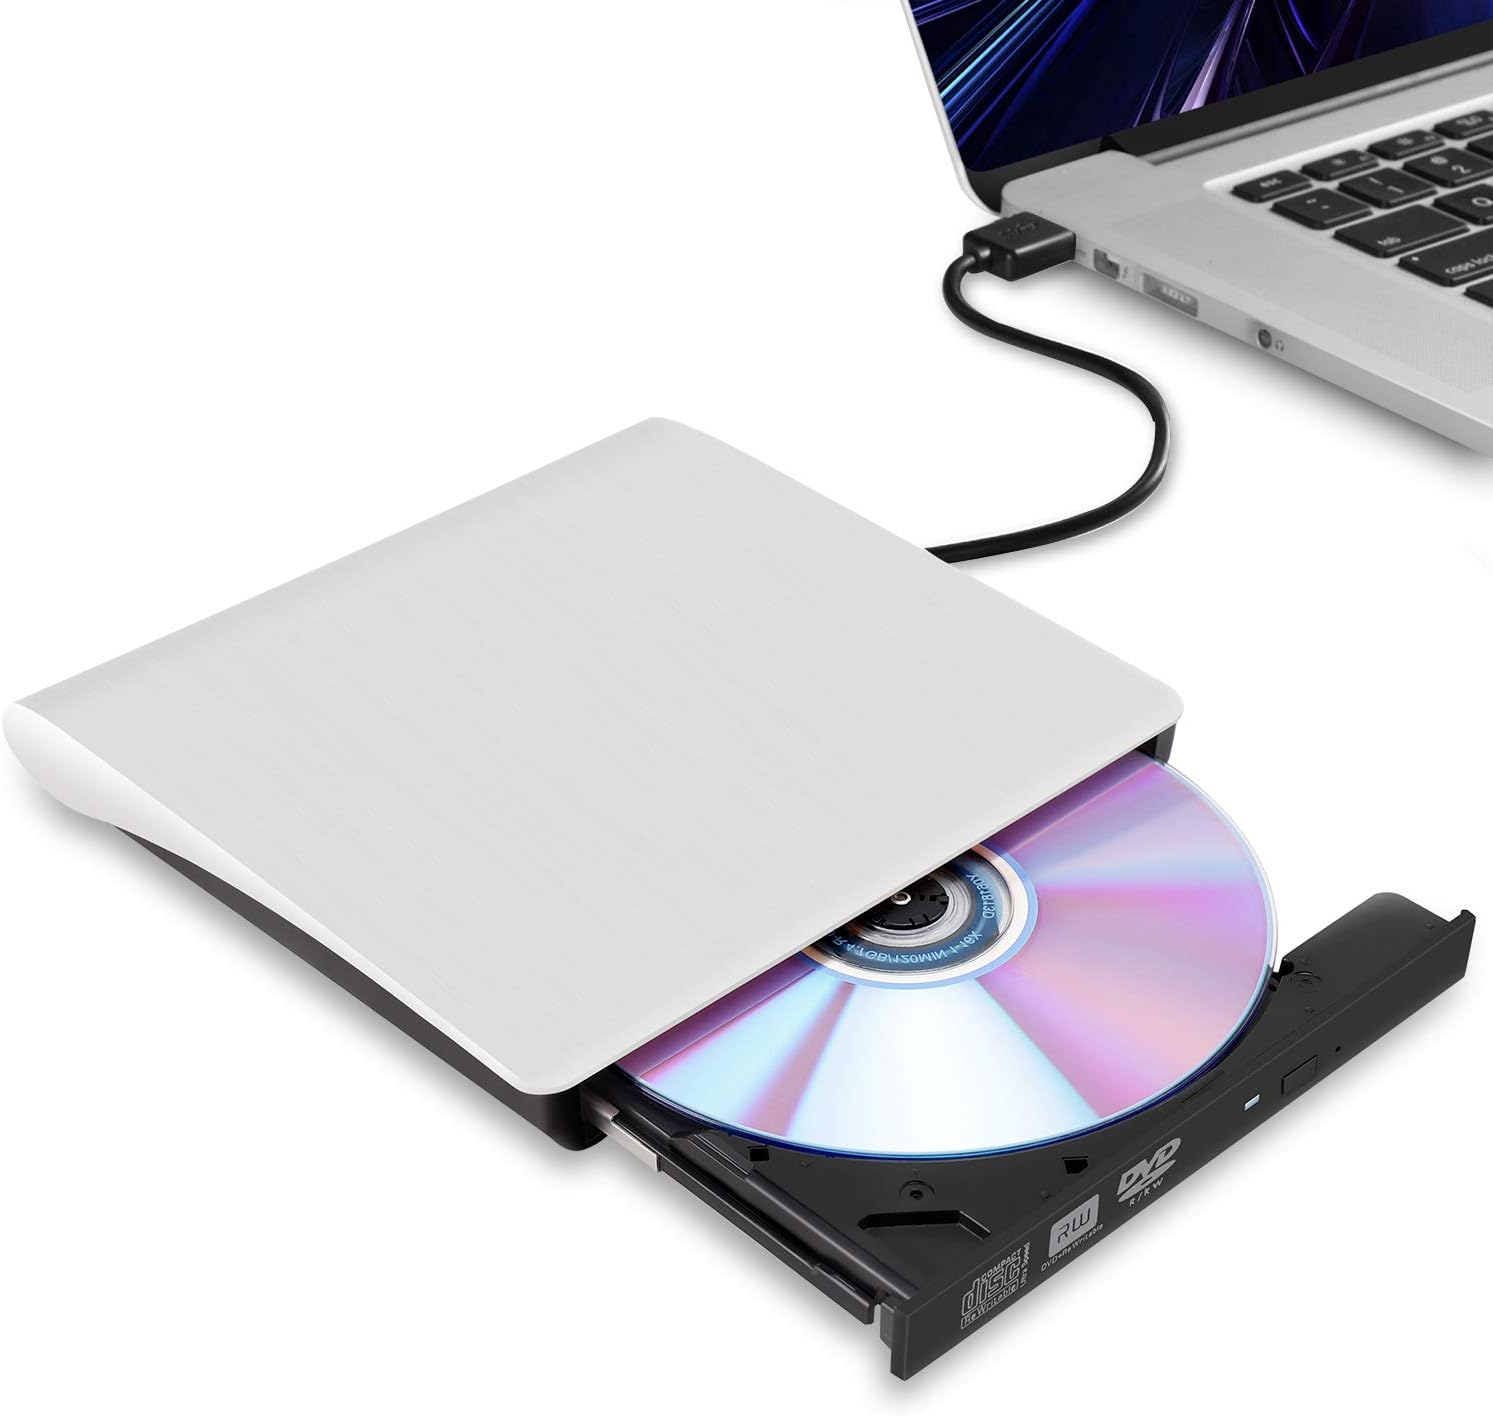 Hcsunfly External CD/DVD Drive for Laptop, USB 3.0 [...]